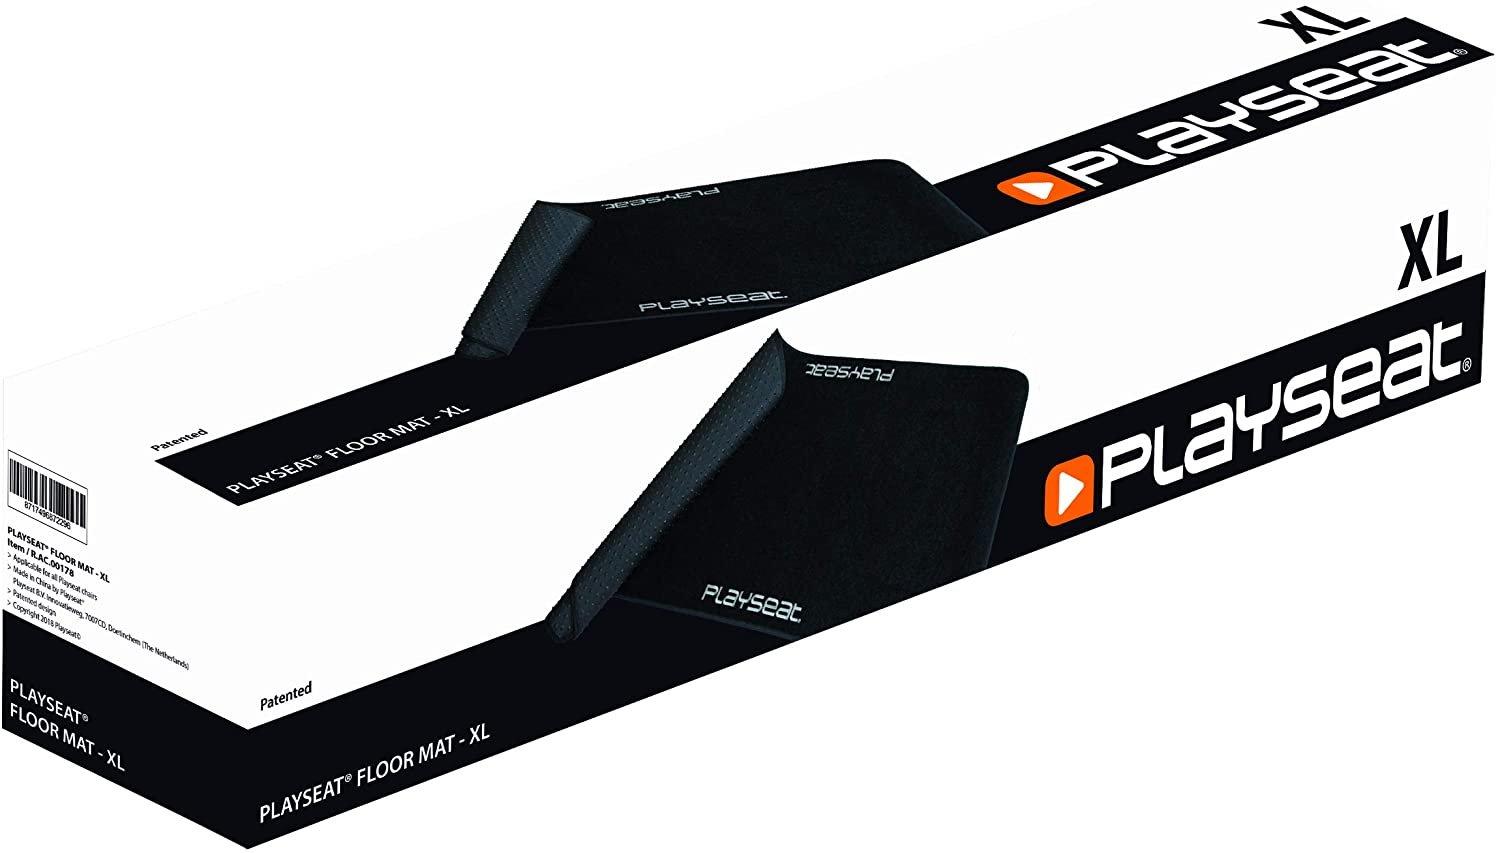 Playseat Floor Mat XL, Racing Video Game Chair Accessory